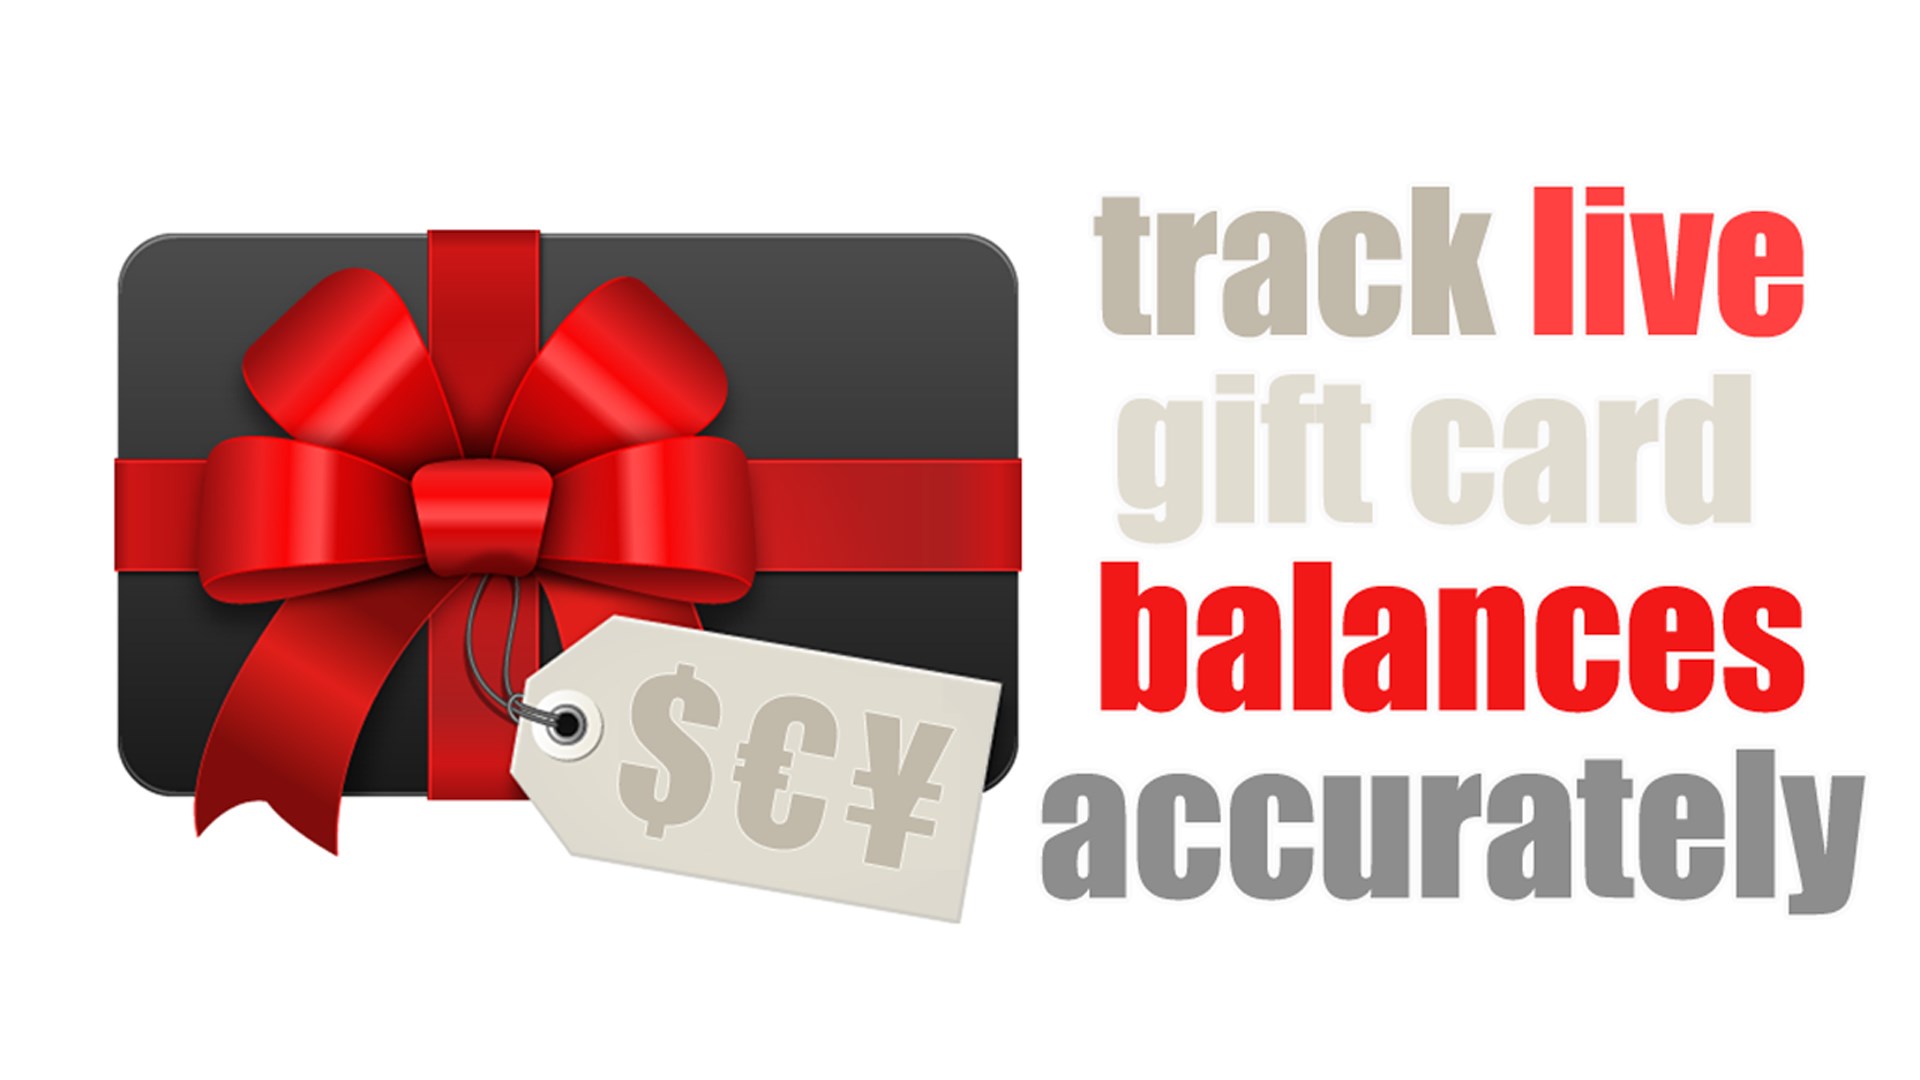 Gift Card Balance - Microsoft Apps